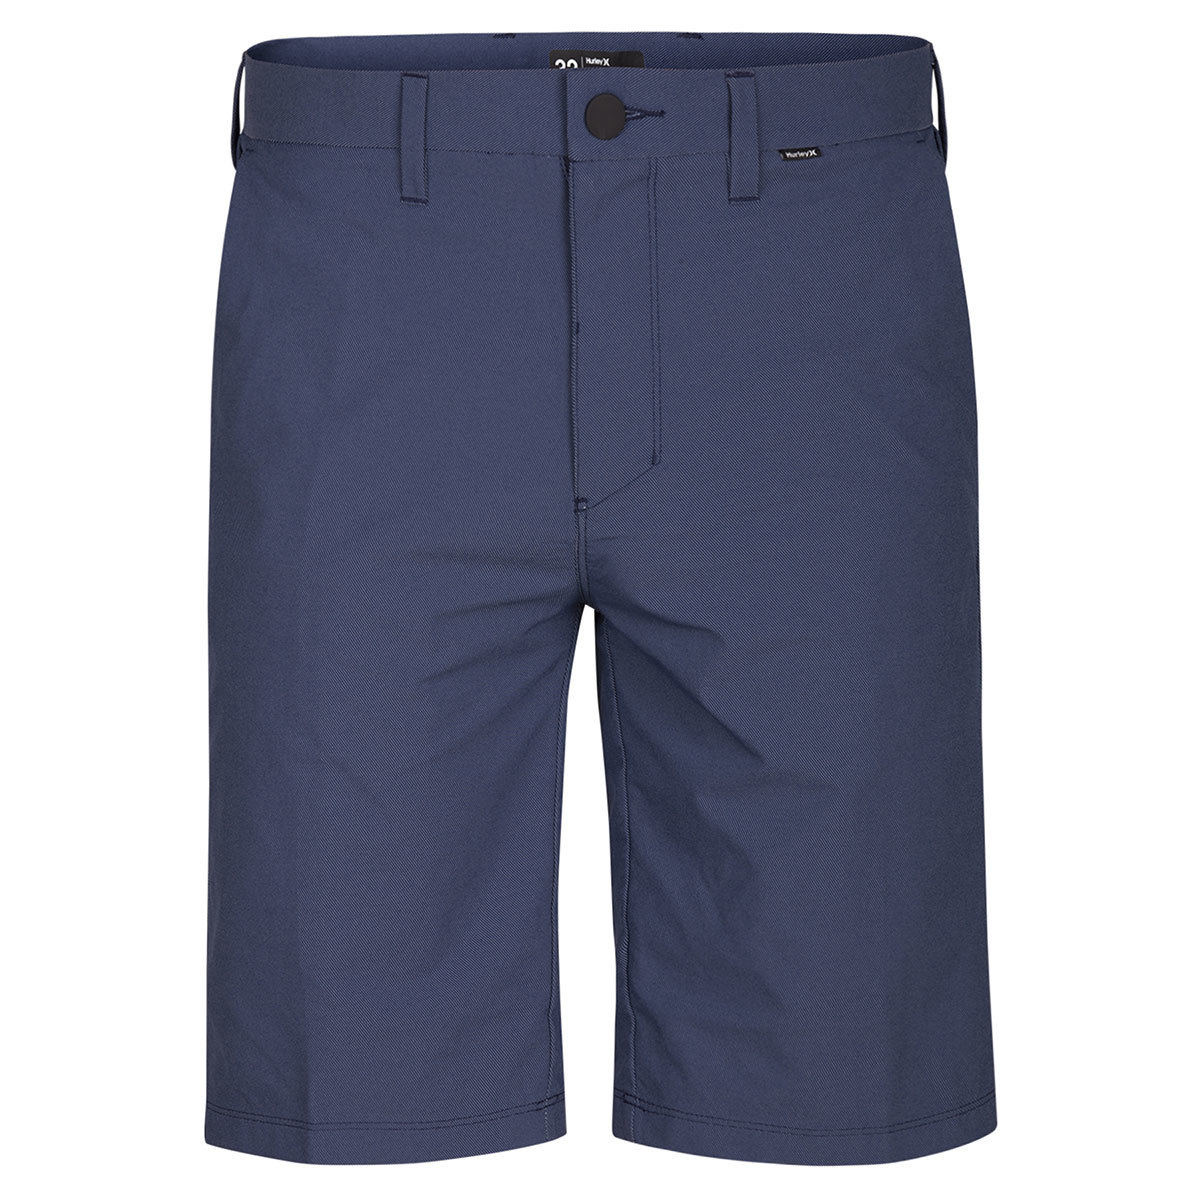 Hurley Guys' Dri-Fit Chino Shorts - Blue, 32